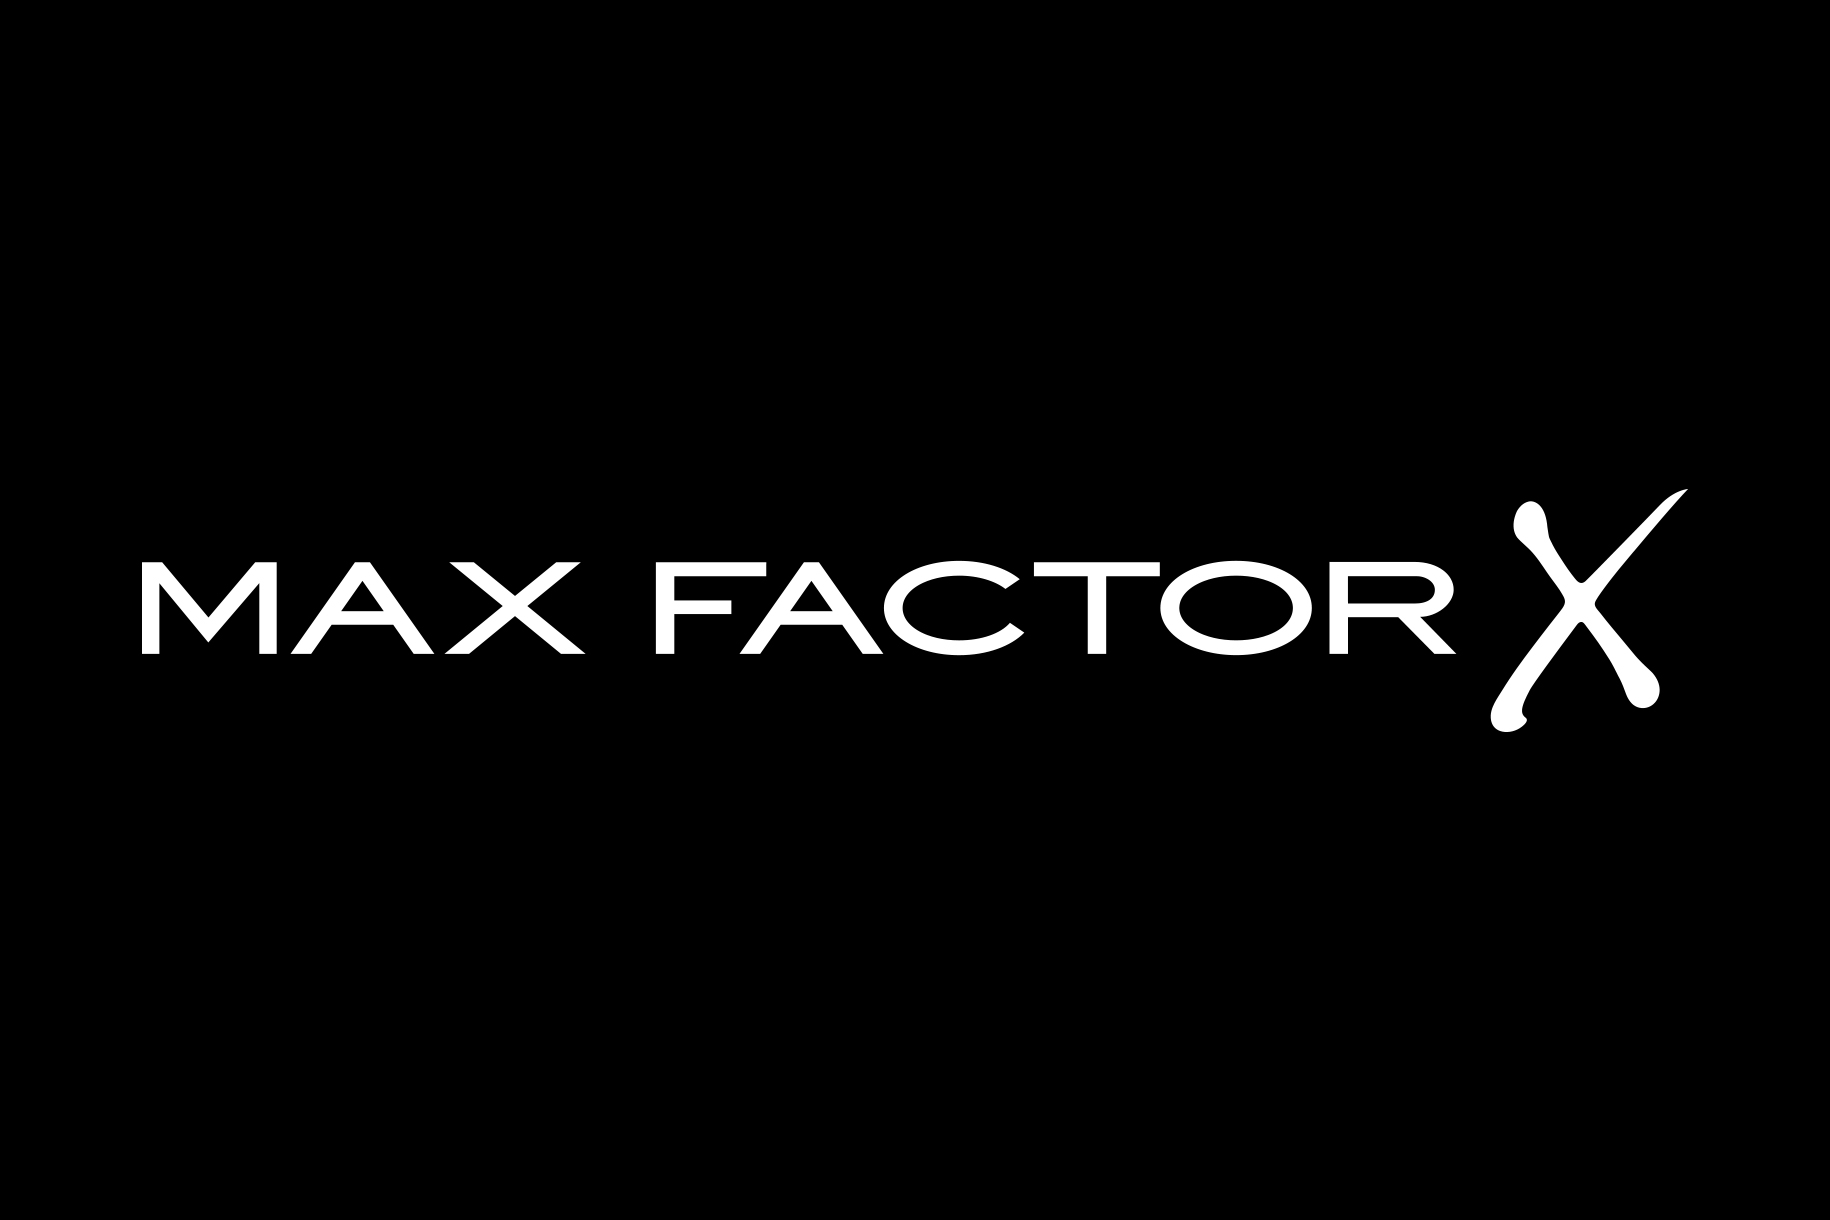 MaxFactor